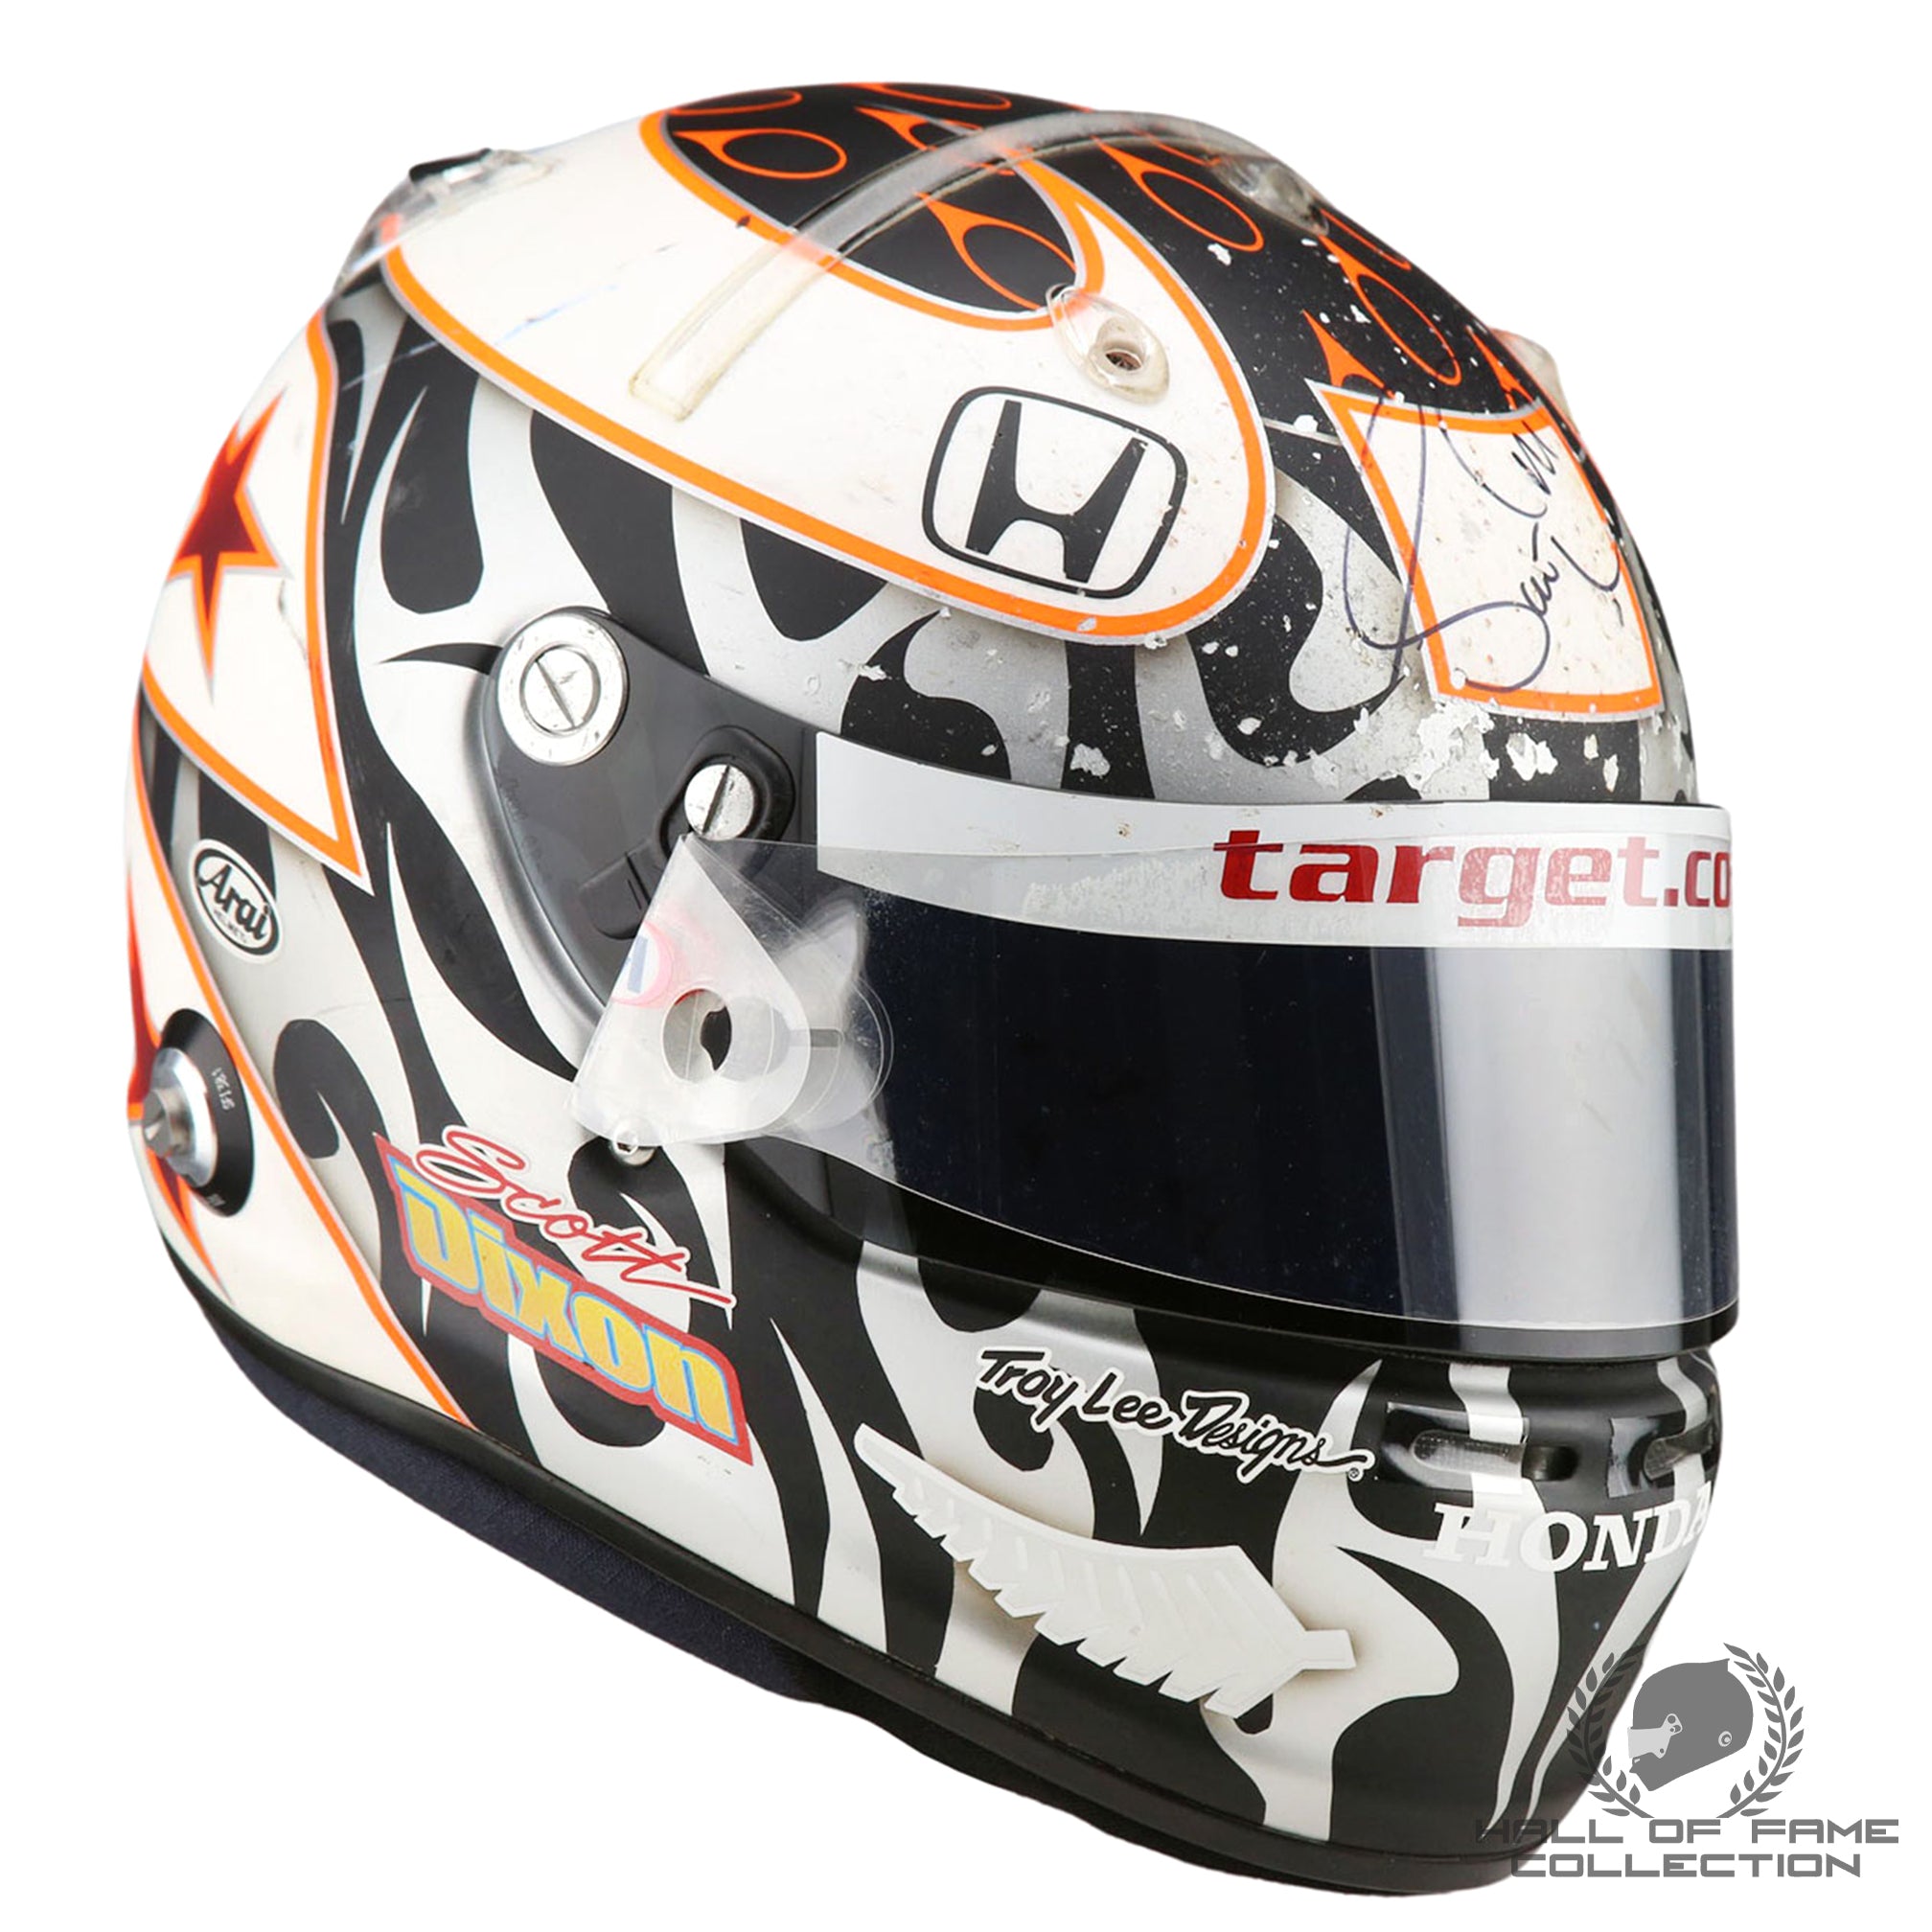 2010 Scott Dixon Signed Race Used Homestead Winning Target Chip Ganassi IndyCar Helmet